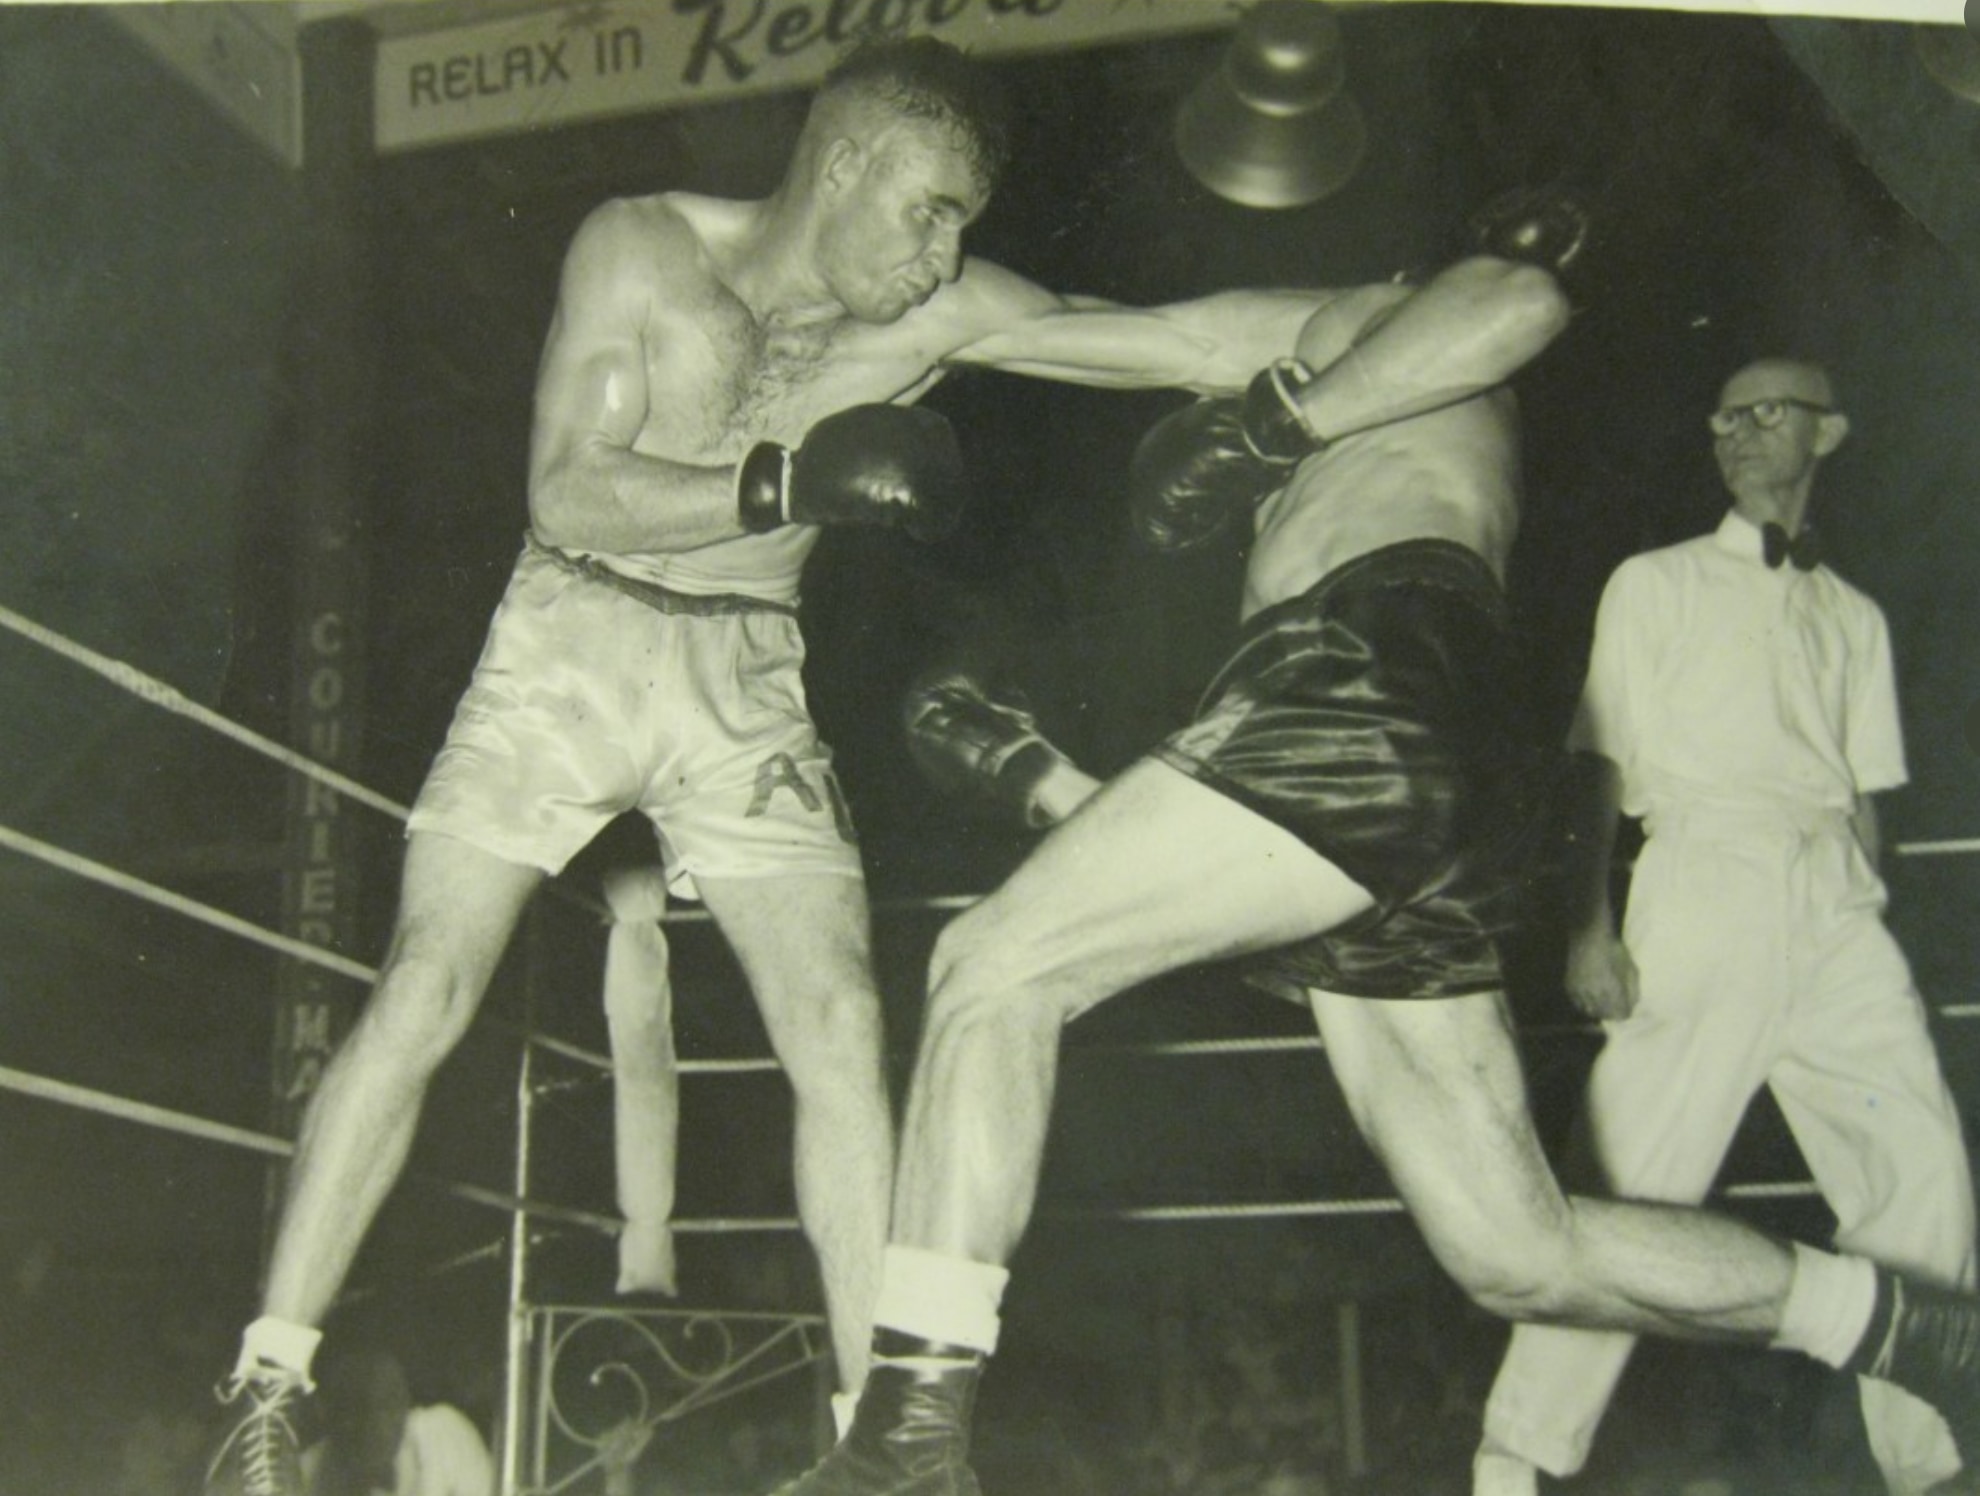 Pat Hill, Boxing Referee